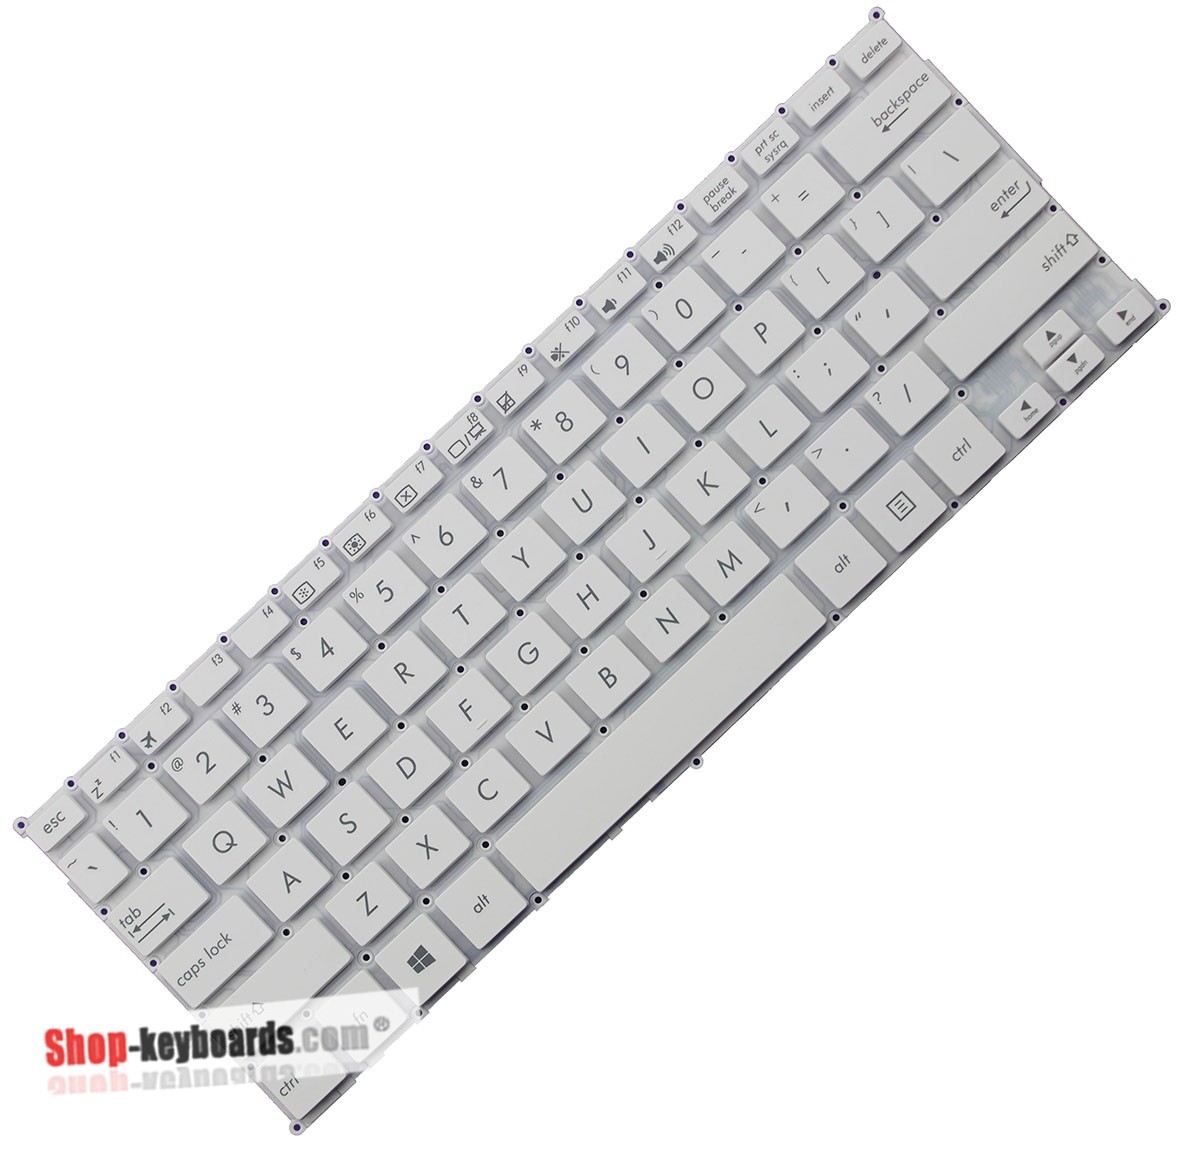 Asus 0KNB0-1128GE00 Keyboard replacement